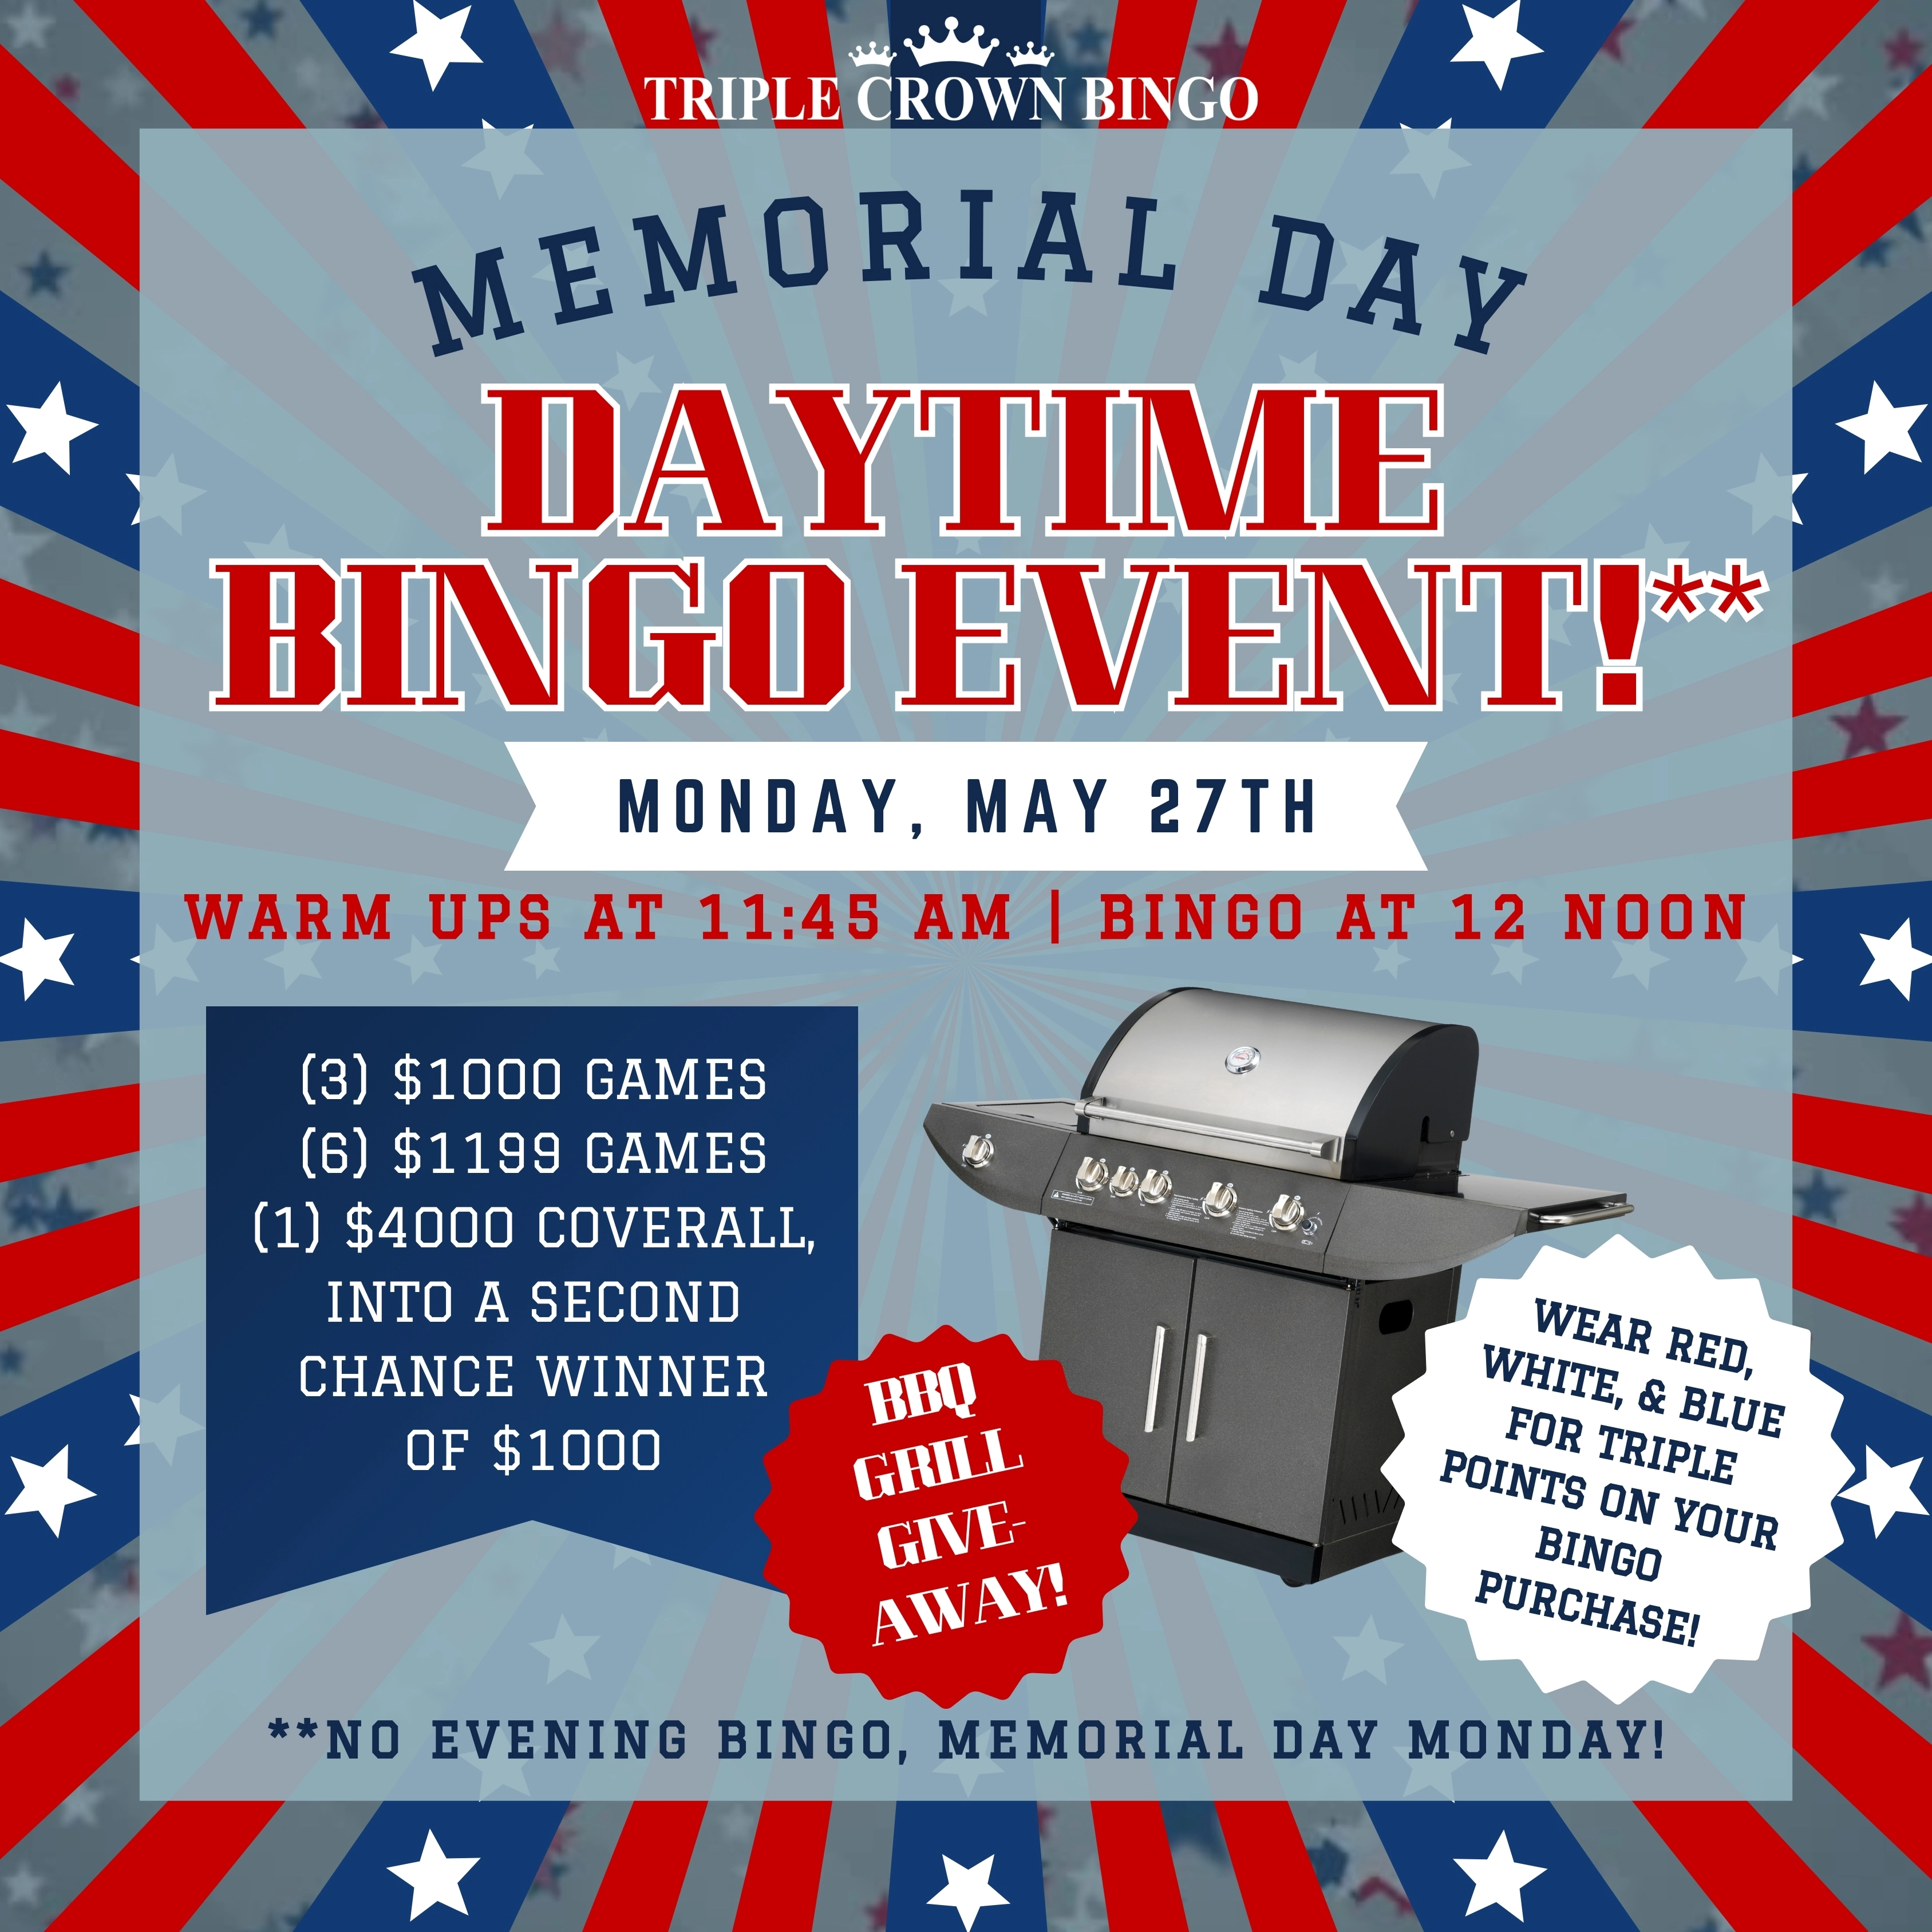 Memorial Day. Daytime Bingo Event!